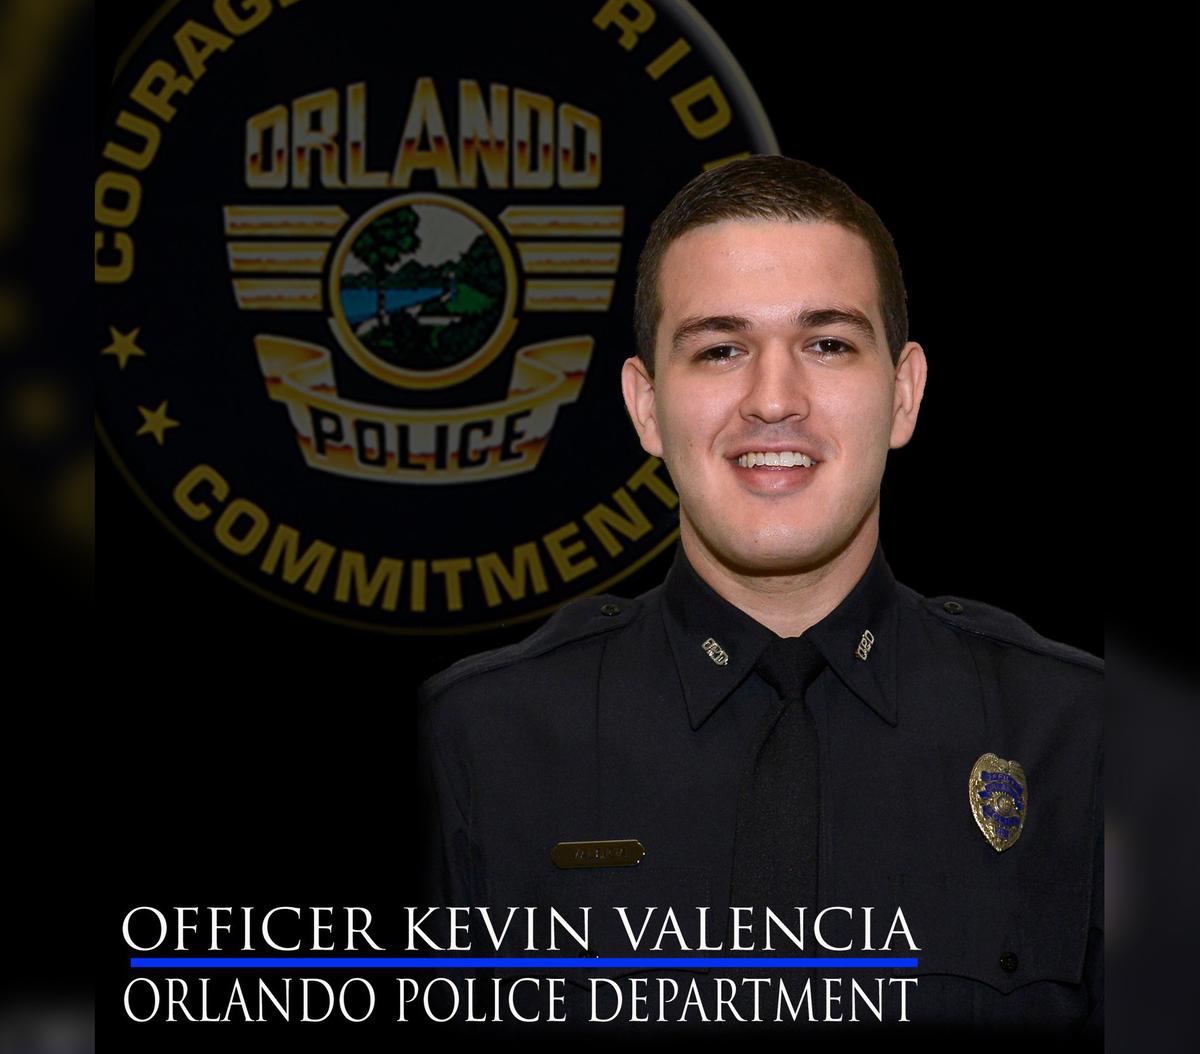 (Courtesy of <a href="https://www.facebook.com/OrlandoPolice">Orlando Police Department</a>)